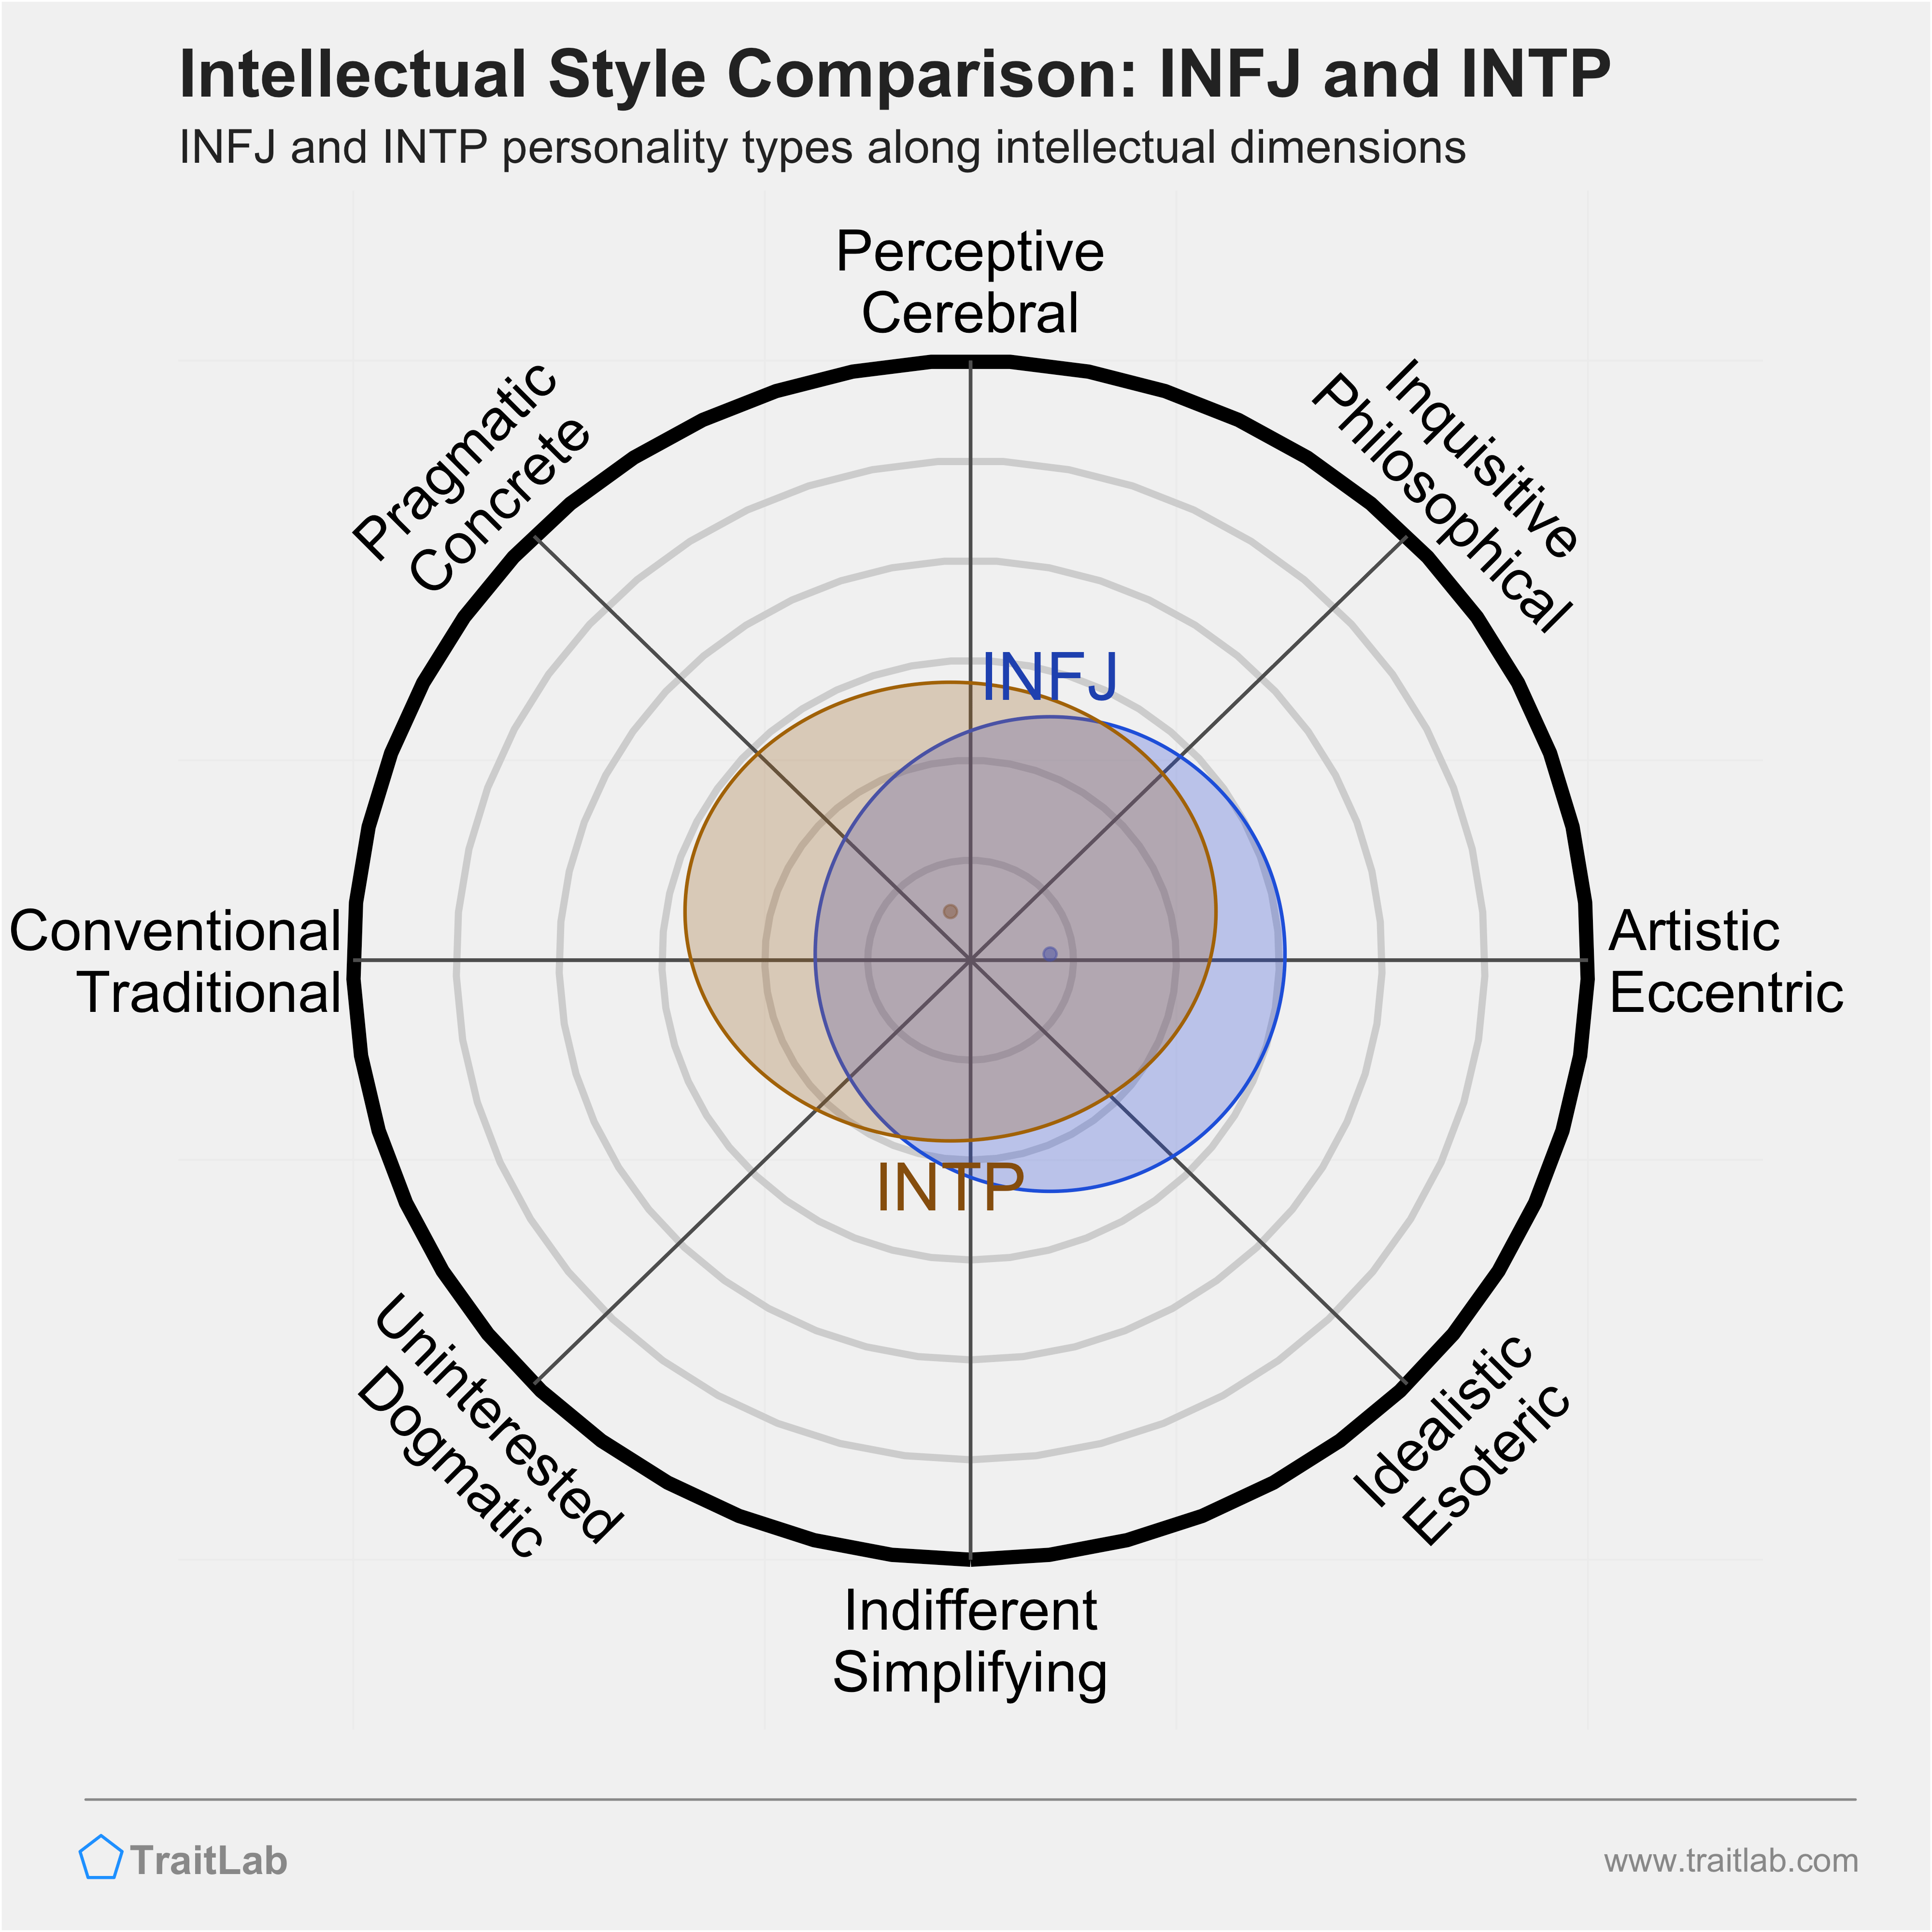 INFJ and INTP comparison across intellectual dimensions